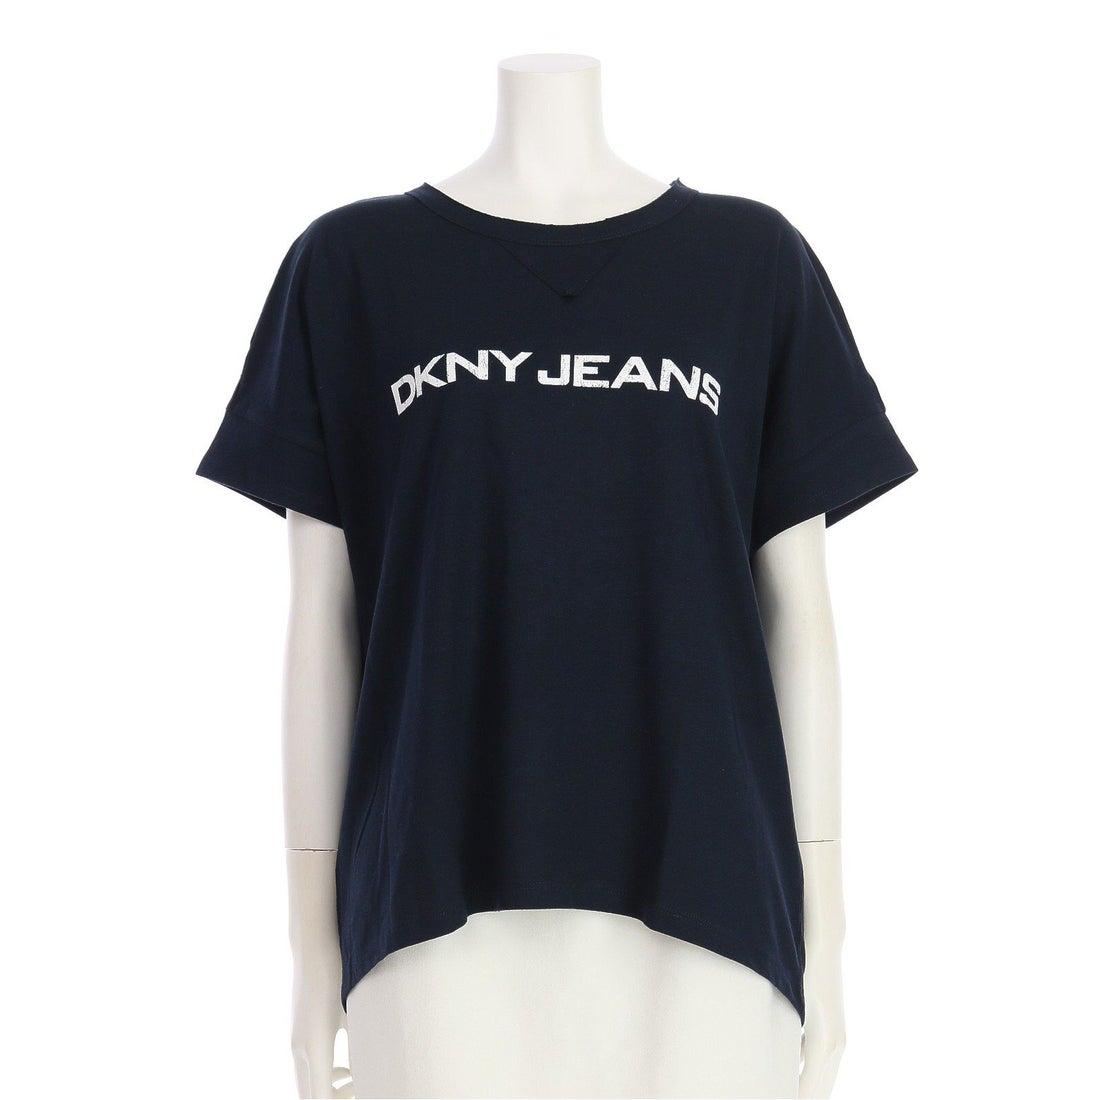 DKNY Jeans リボンコットントップ - キャミソール